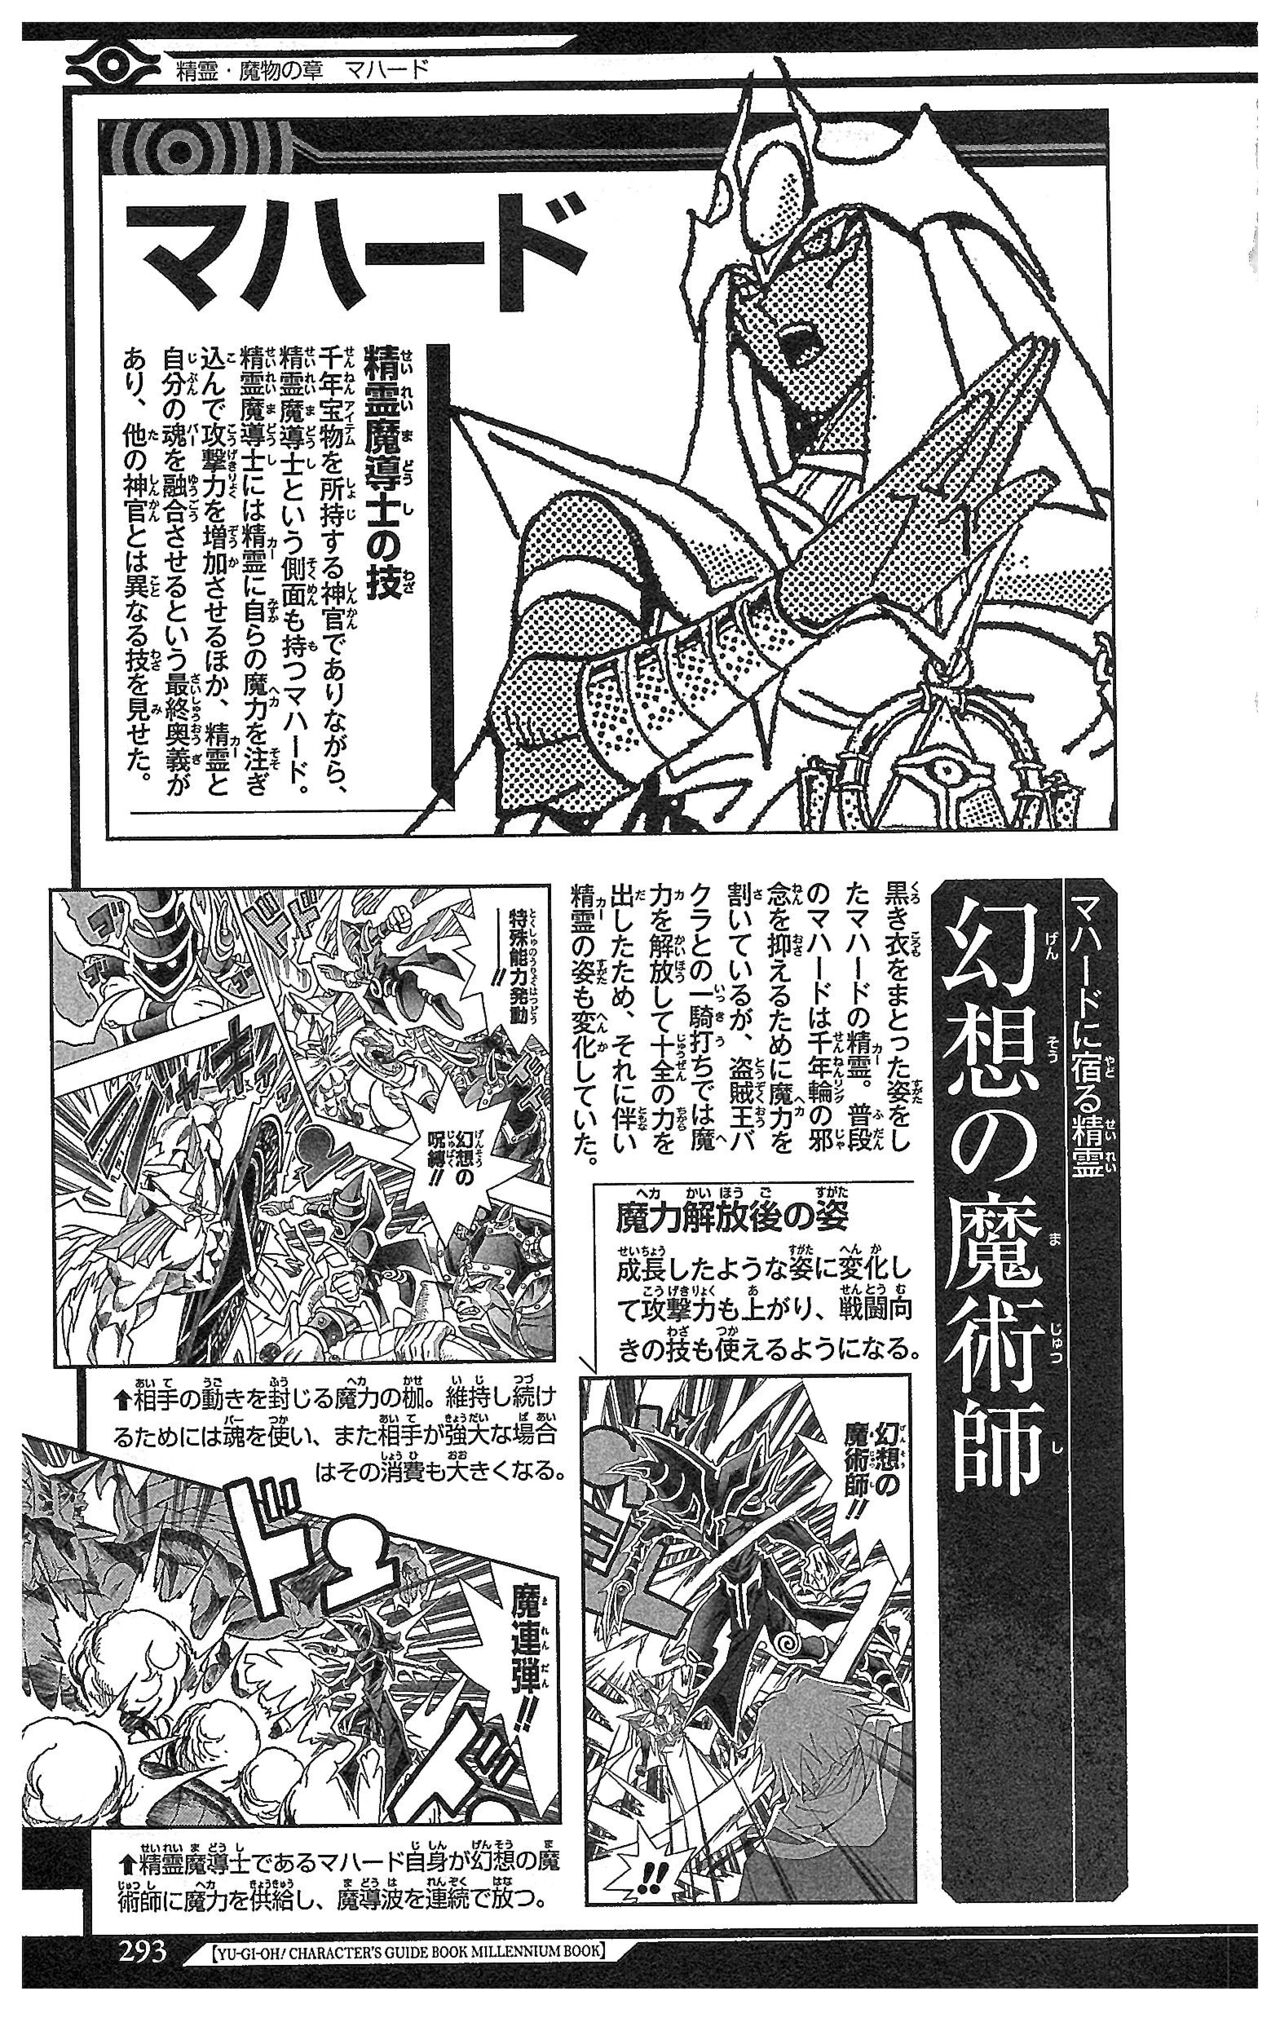 Yu-Gi-Oh! Character Guidebook: Millennium Book 289